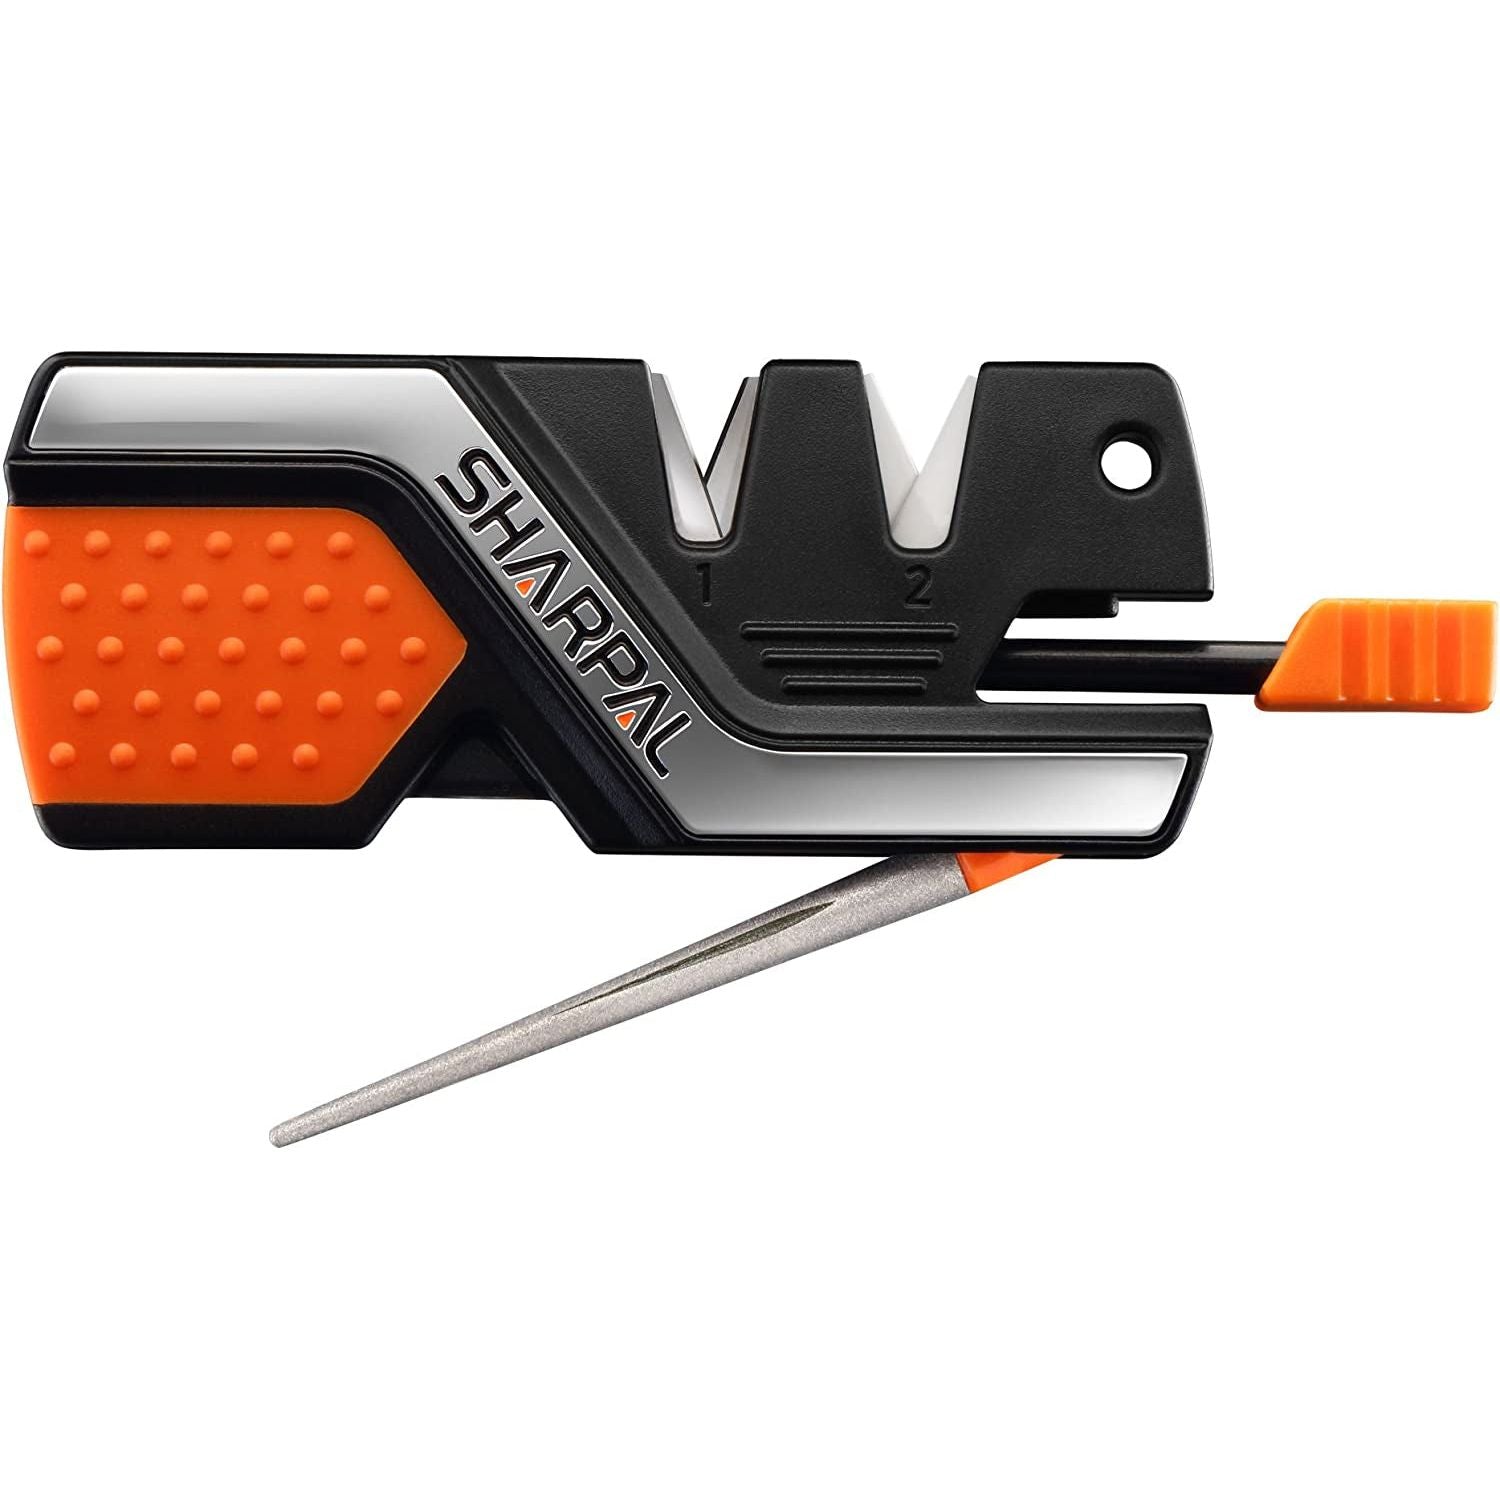 6-In-1 Pocket Knife Sharpener & Survival Tool